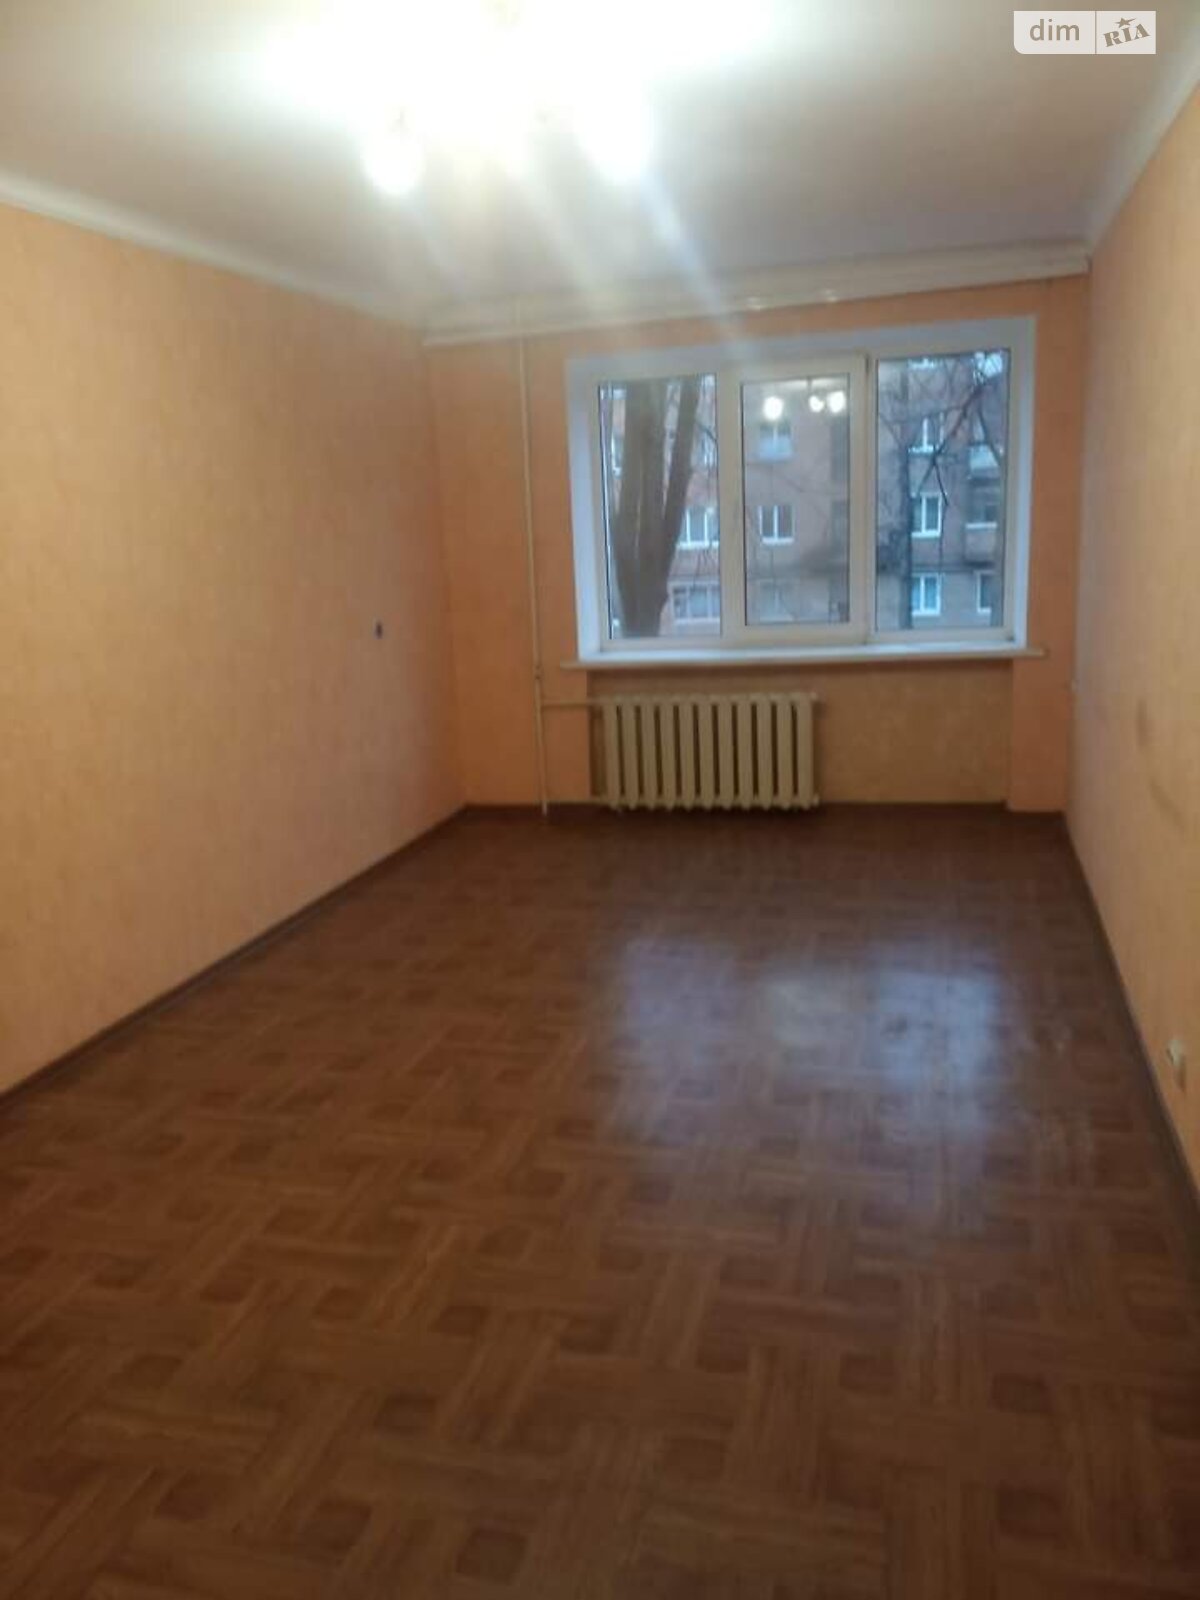 Продажа двухкомнатной квартиры в Сумах, на ул. Николая Сумцова 26, район Химгородок фото 1